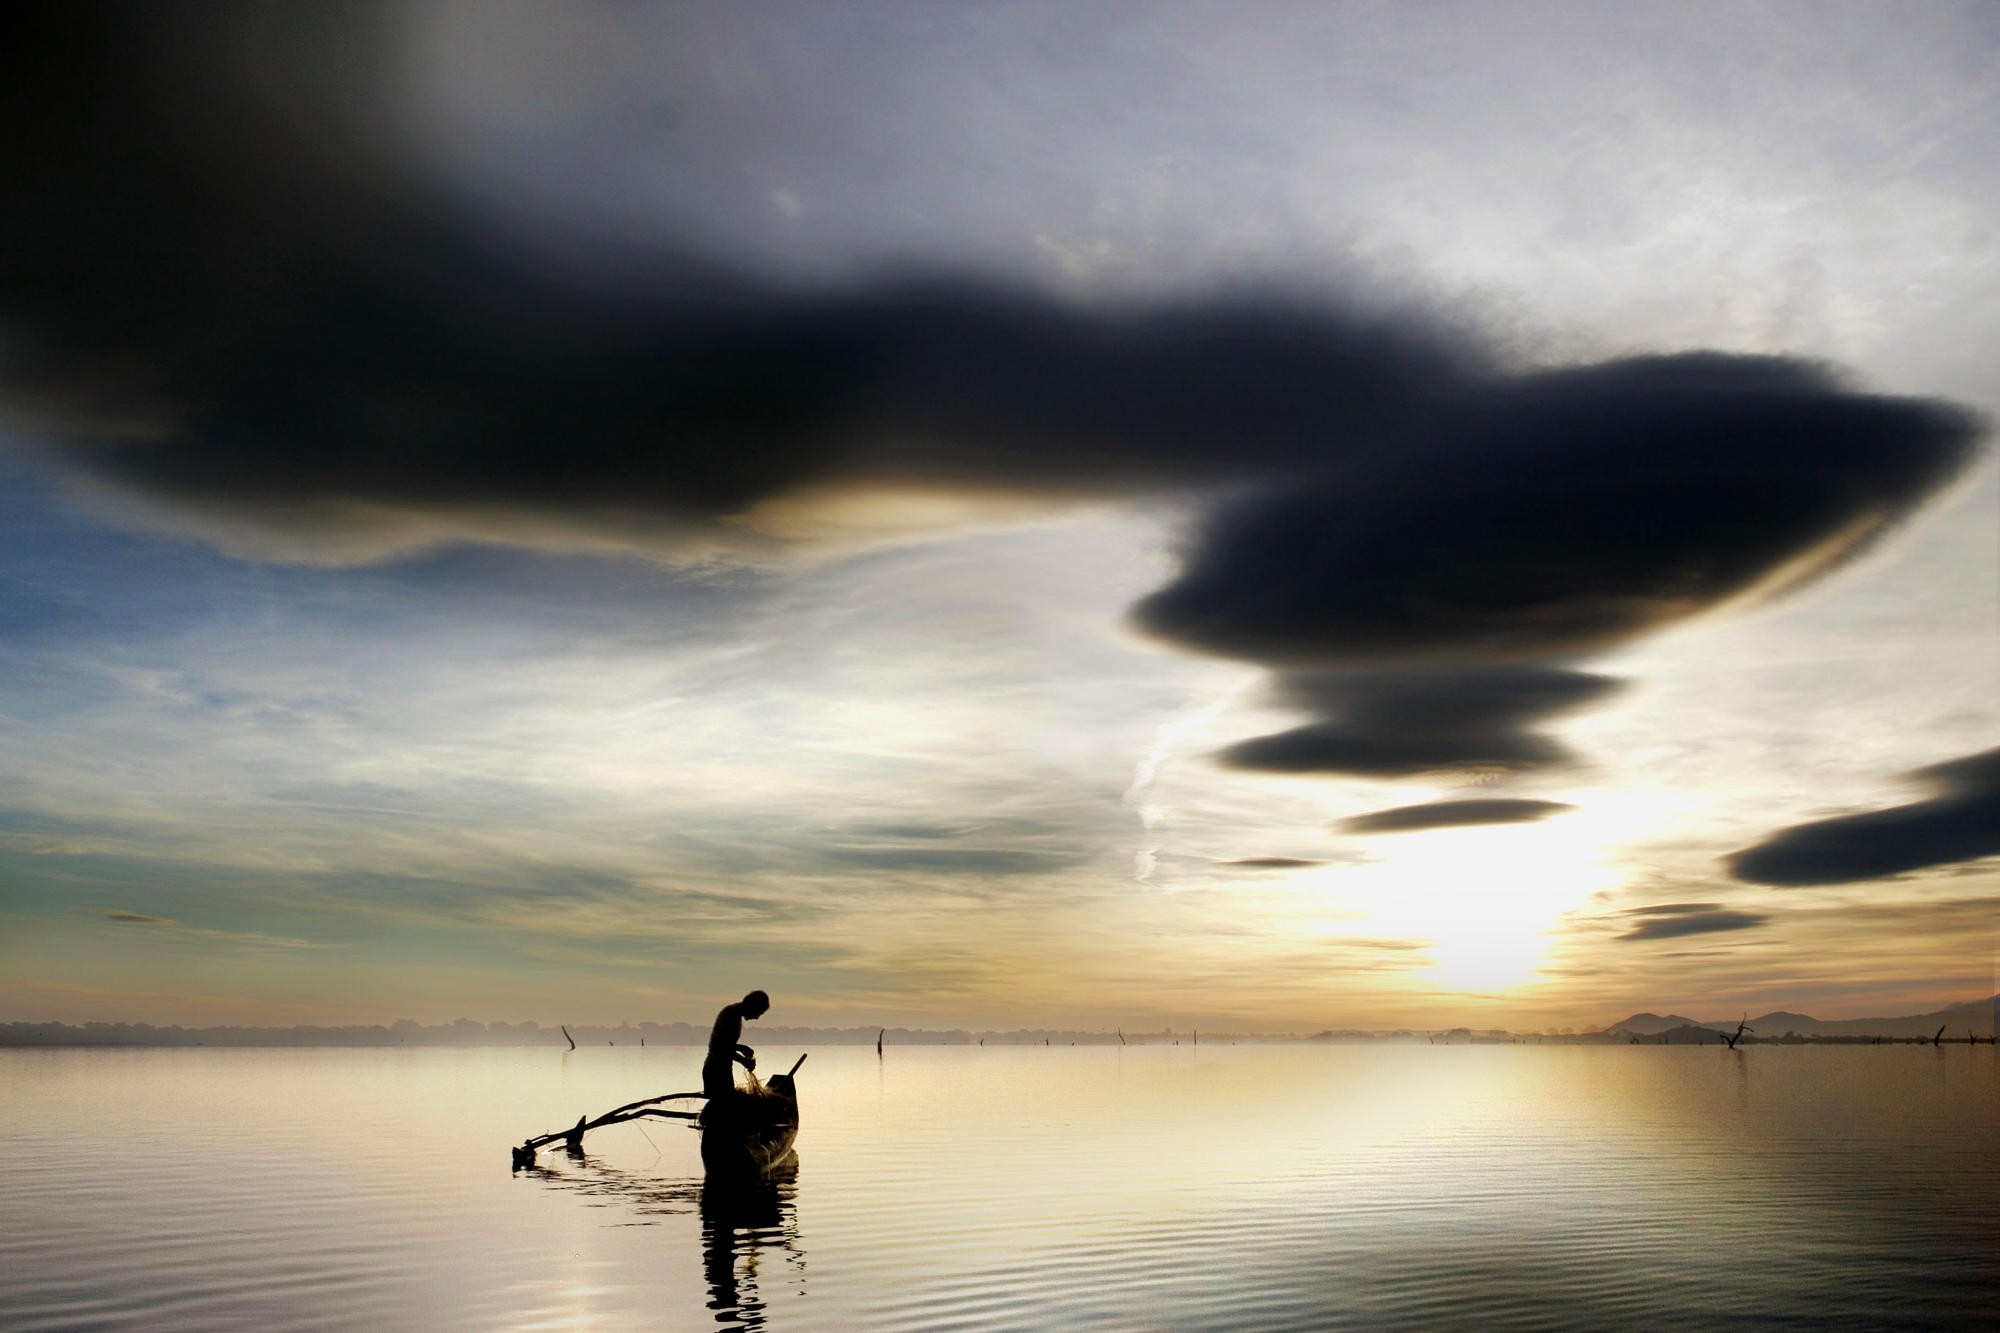 210803 скачать обои рыбак, фотографии, лодка, облака, ловит рыбу, озеро, небо, восход солнца - заставки и картинки бесплатно